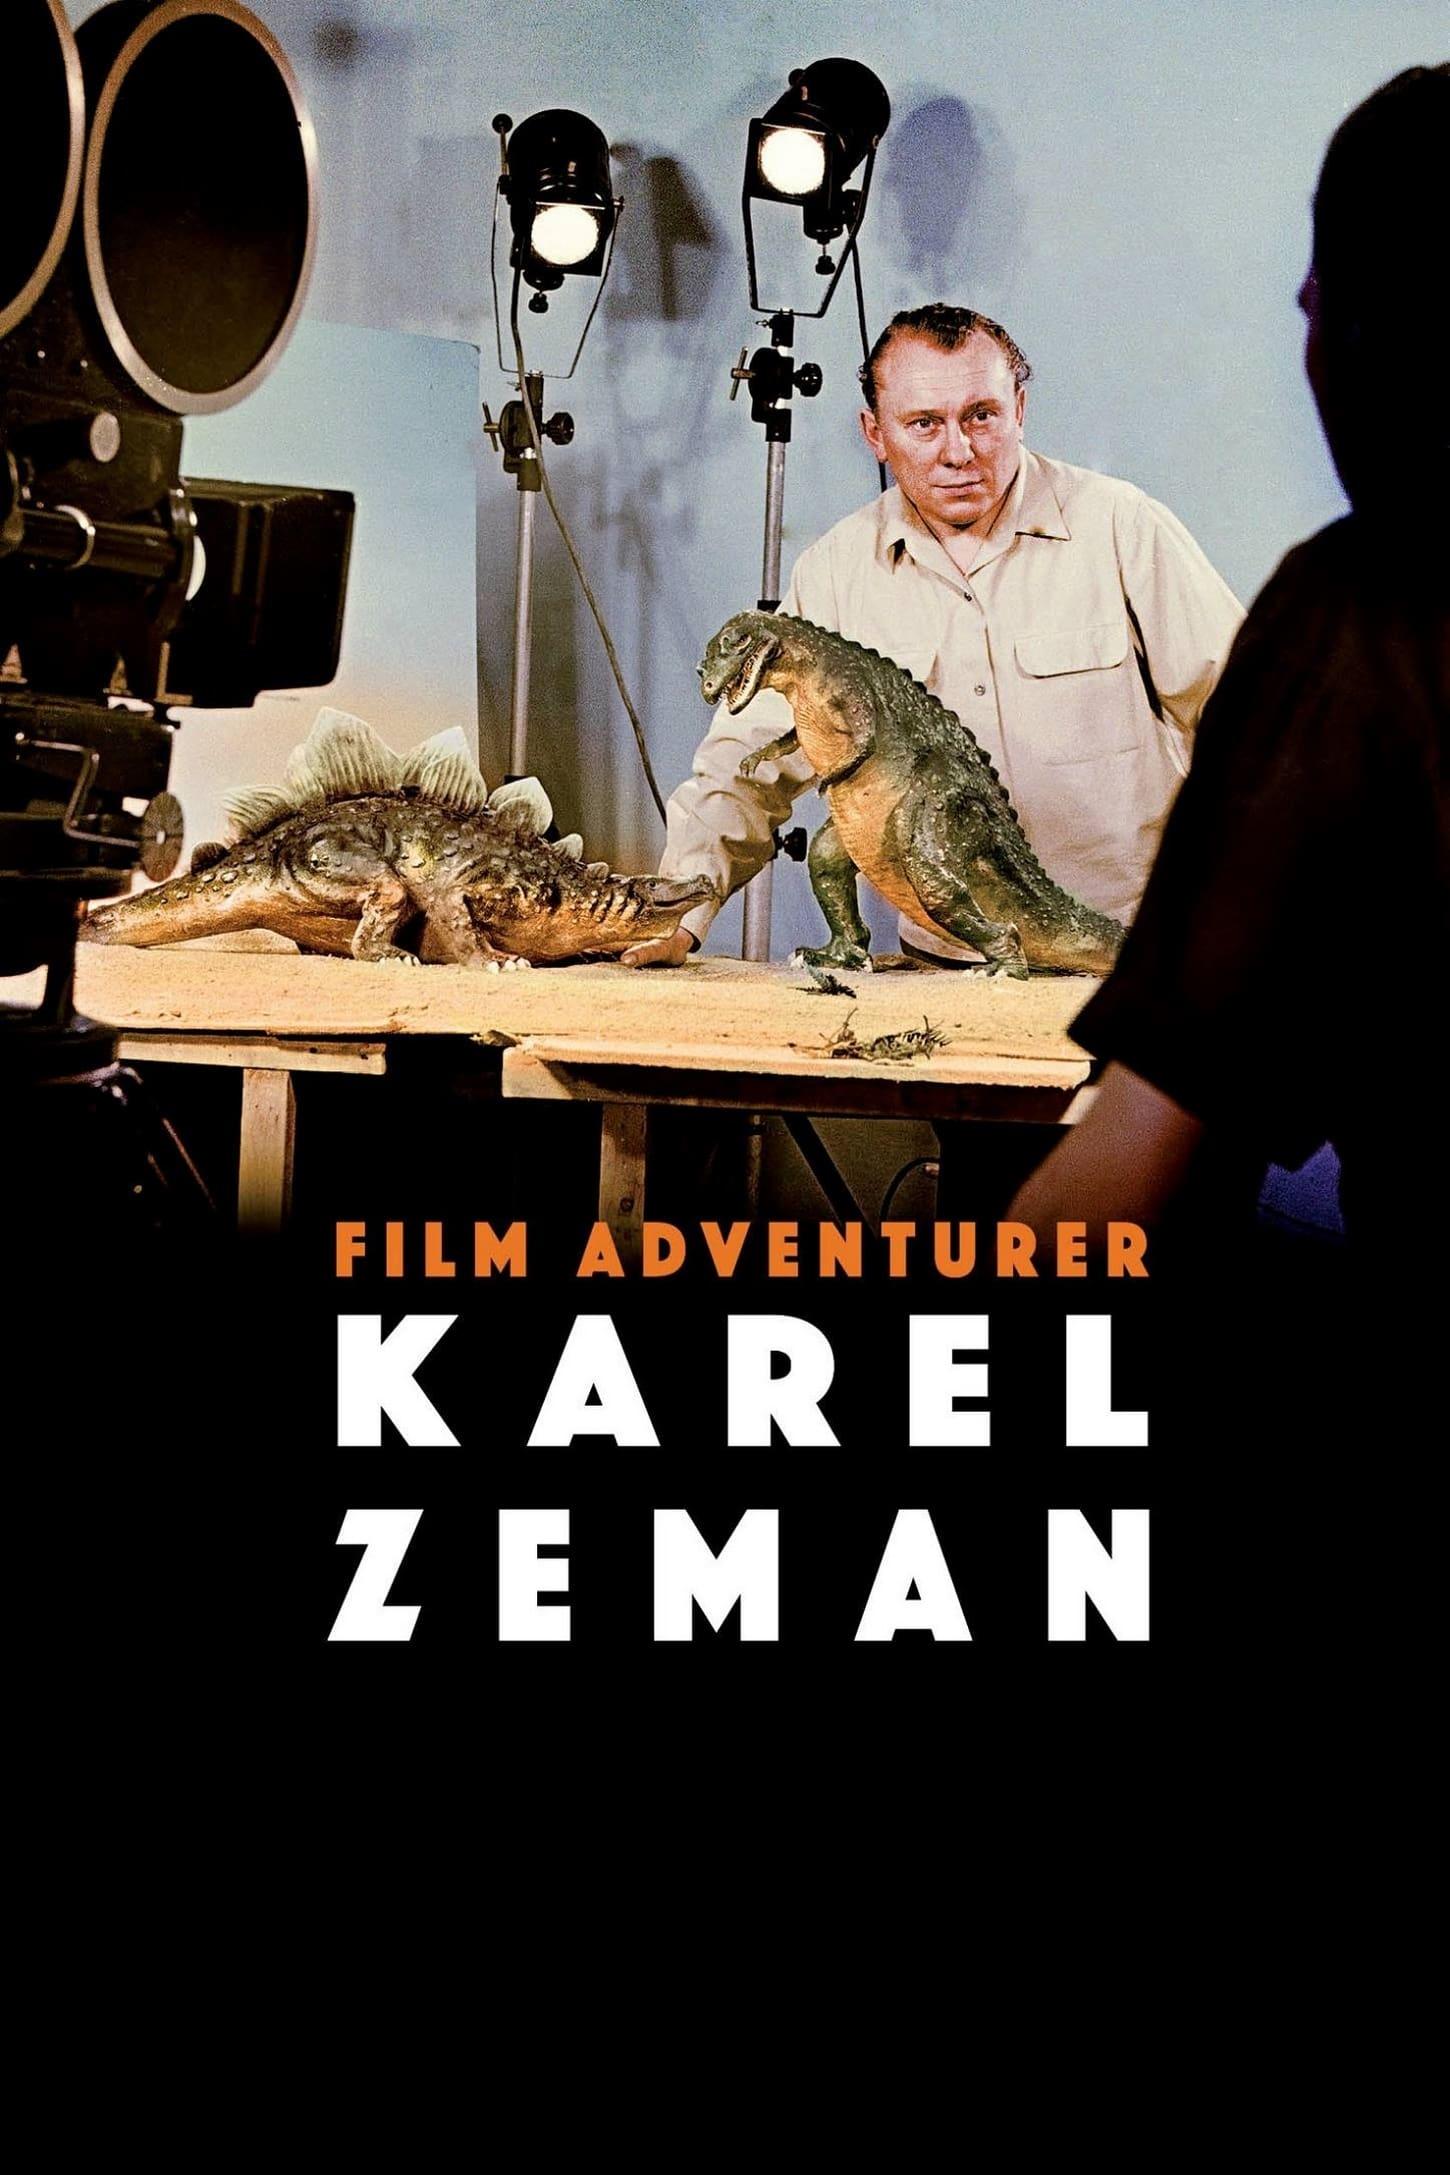 Film Adventurer Karel Zeman poster